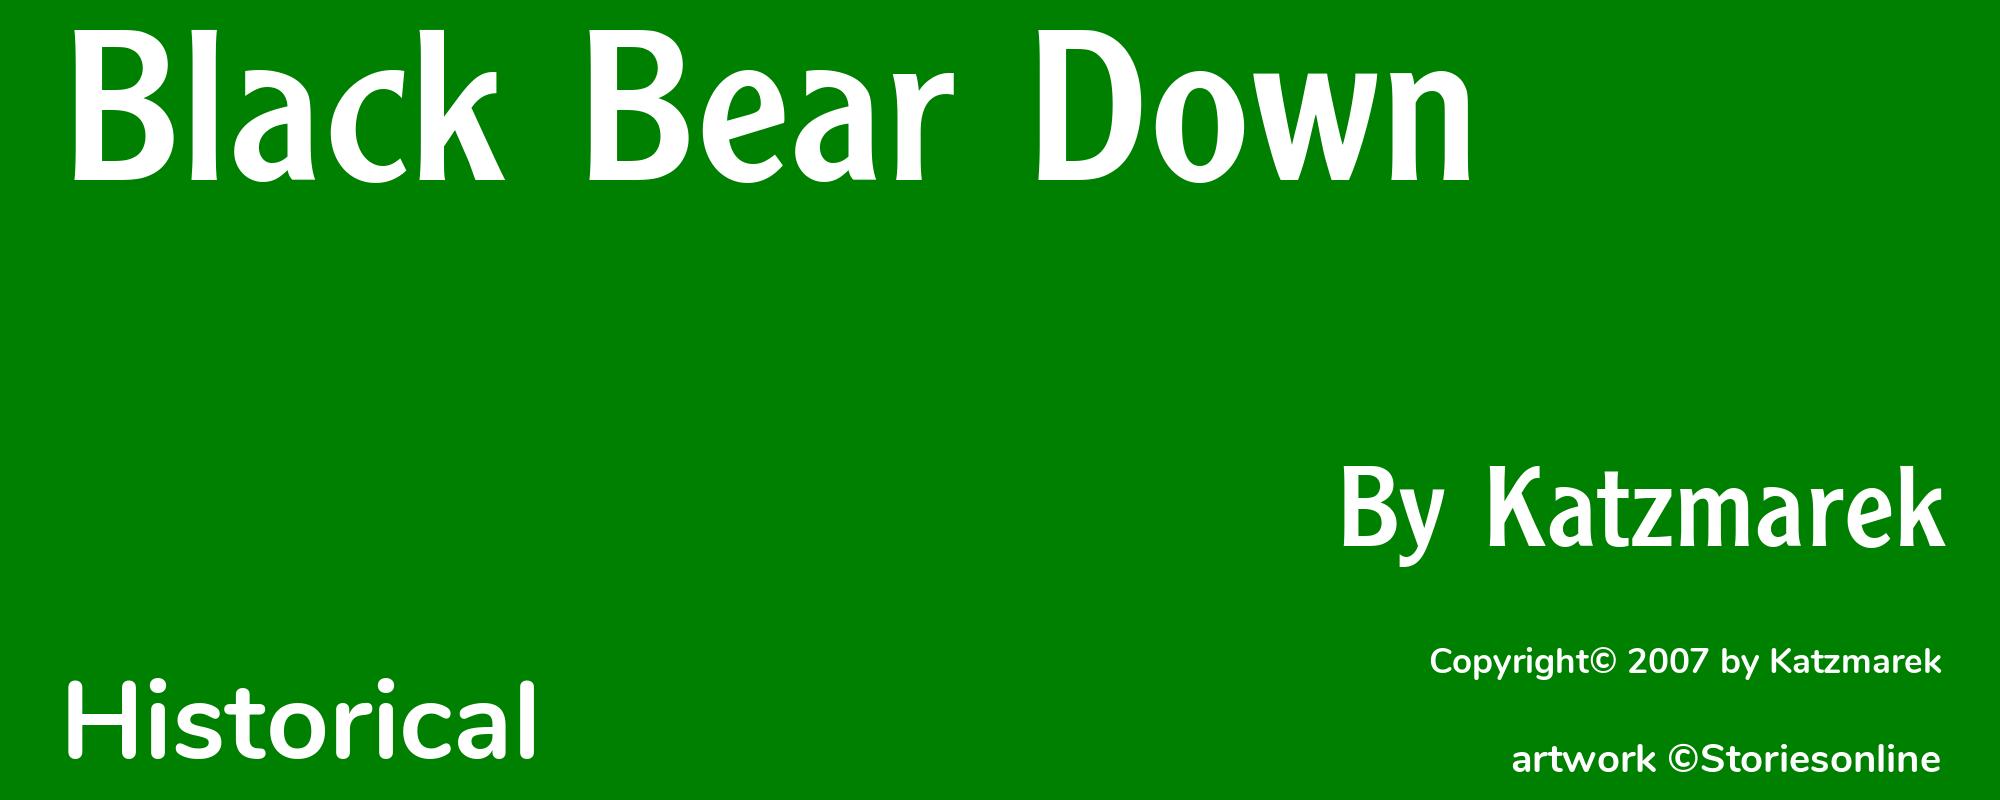 Black Bear Down - Cover